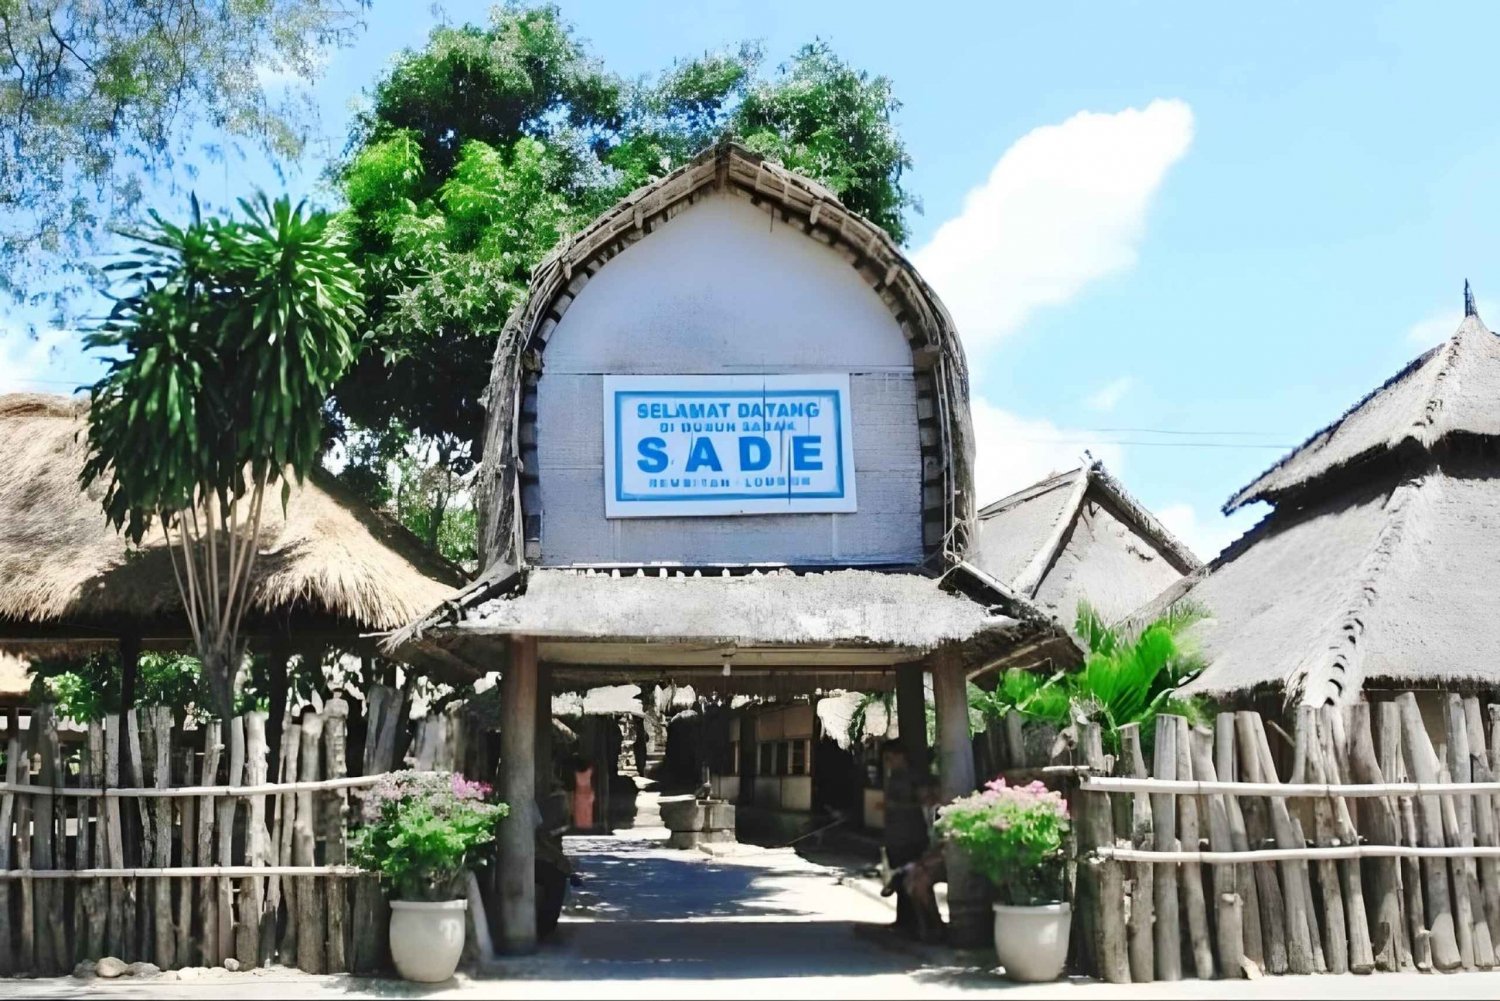 Sade Village, Kuta Lombok, and South Coasts: Private Tour